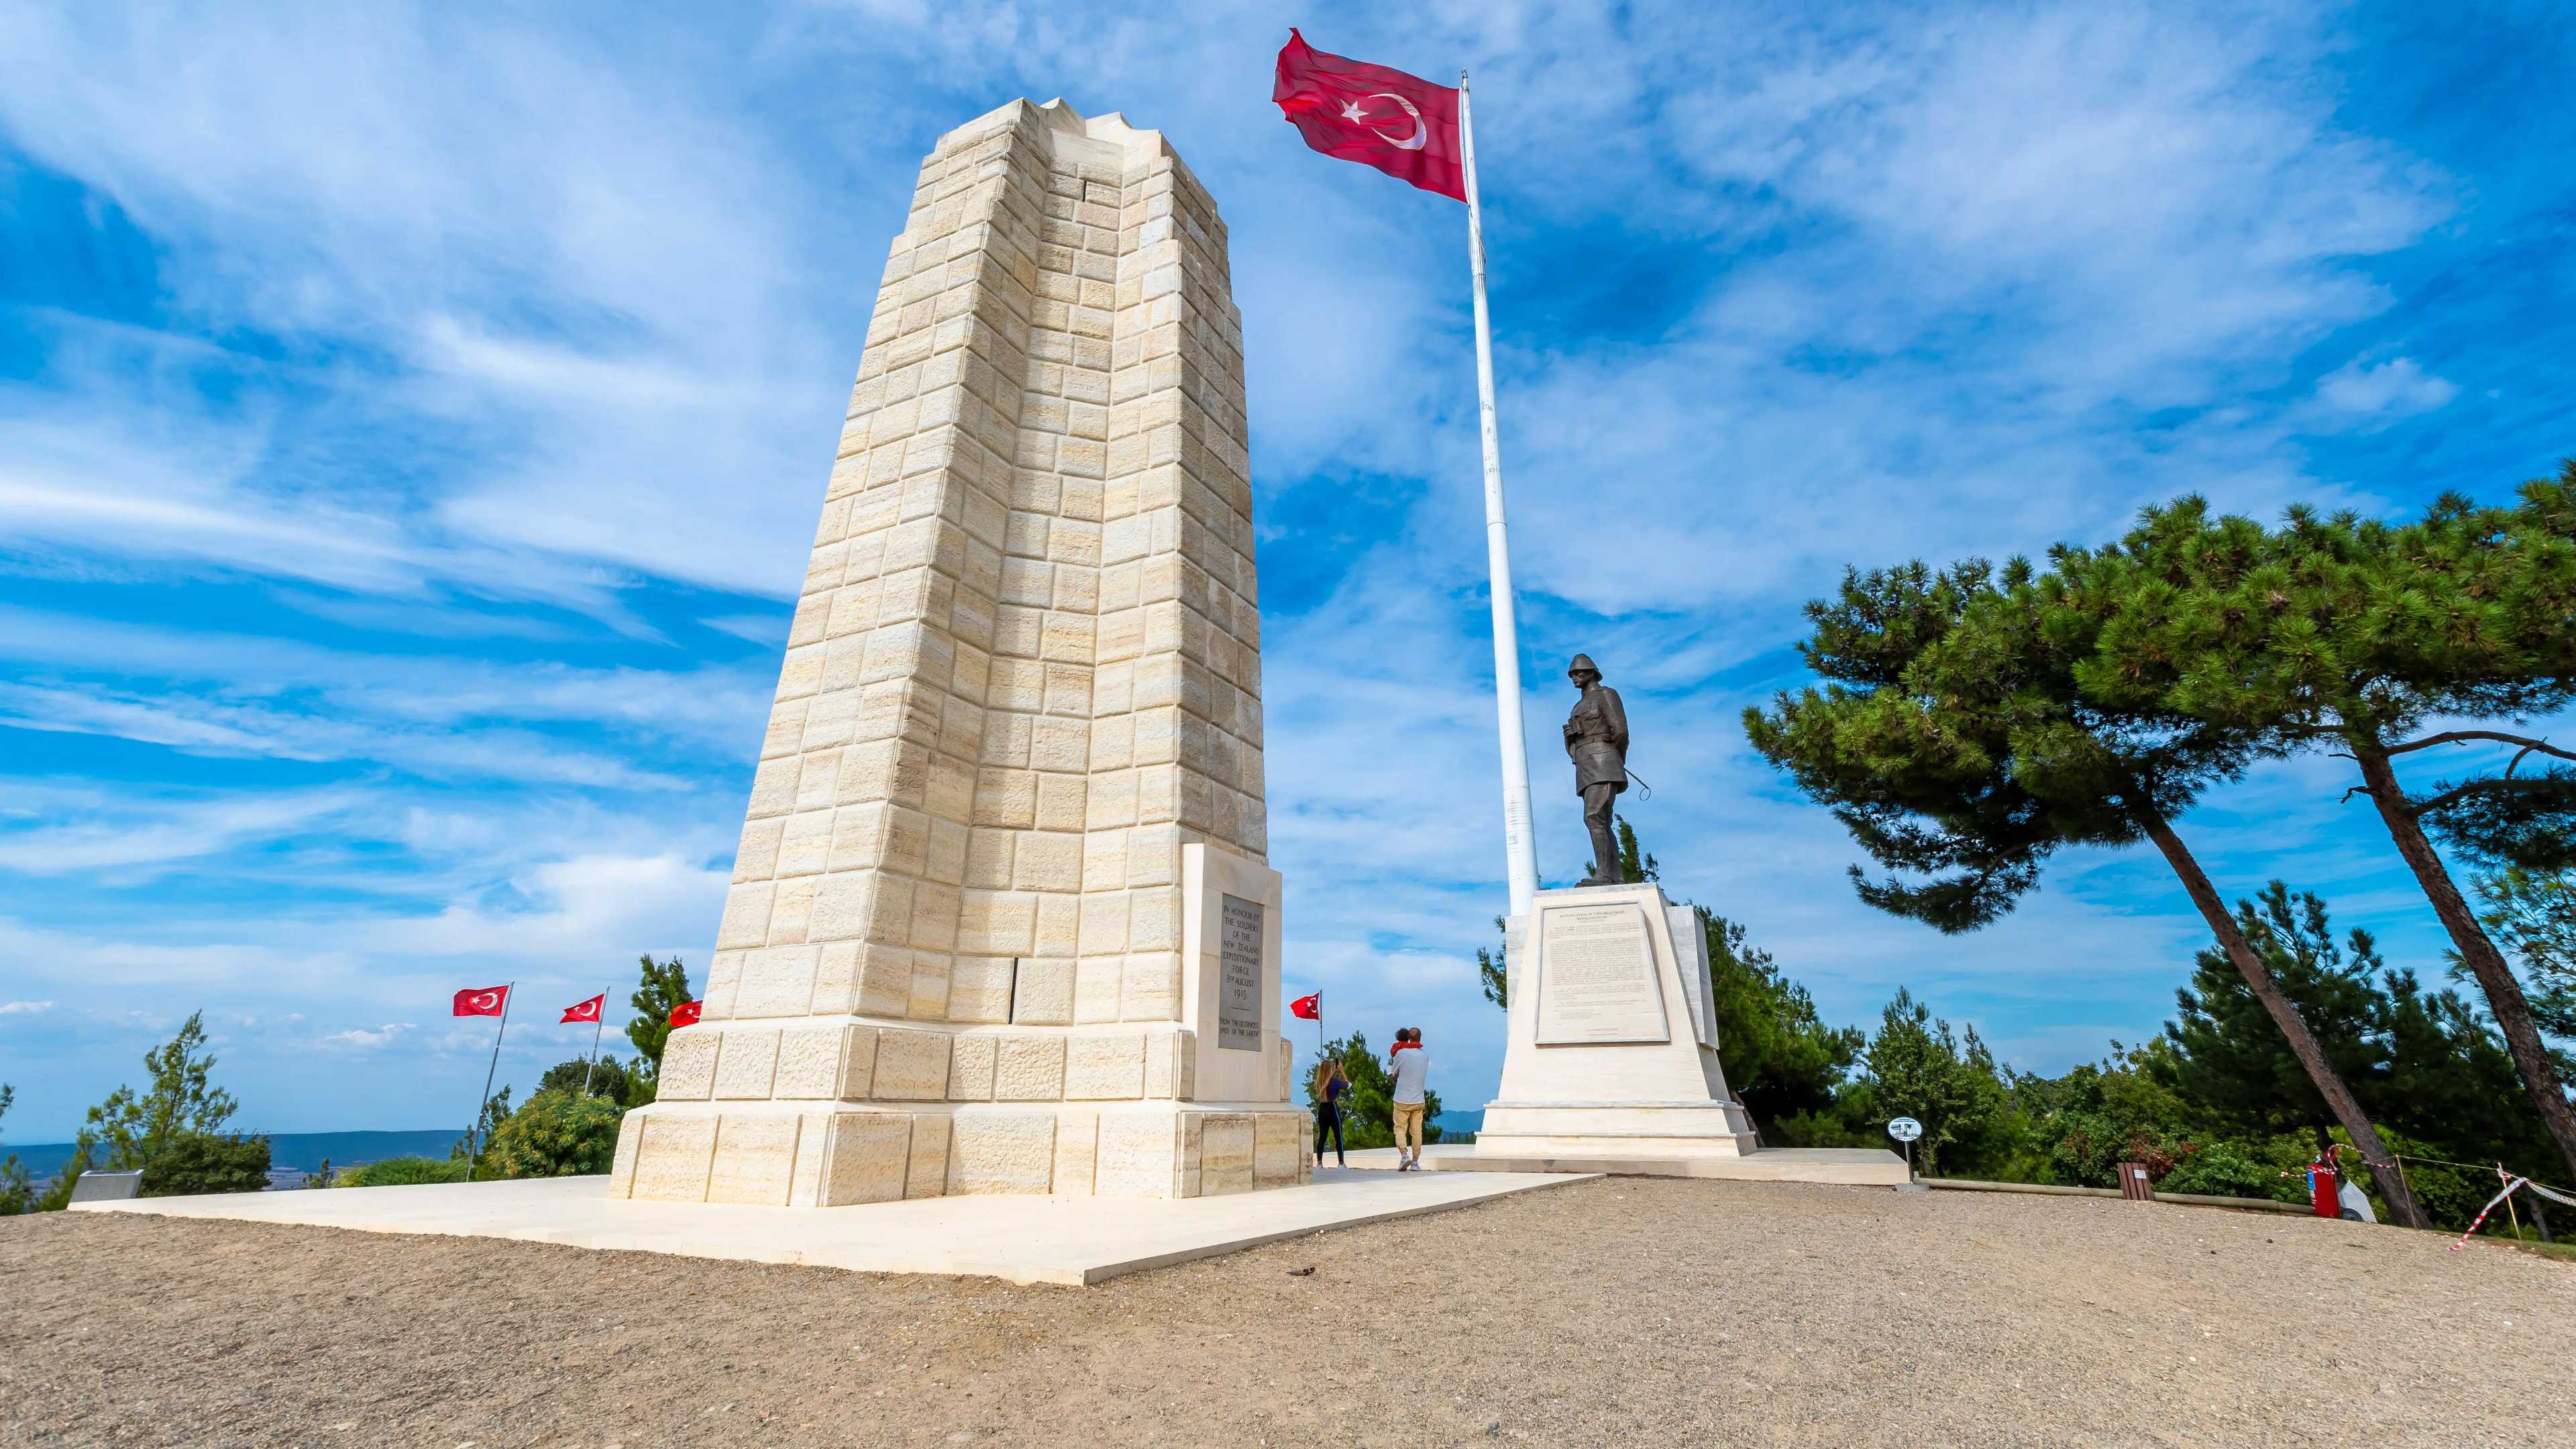 Conkbayir Ataturk Victory Monument - Gallipoli